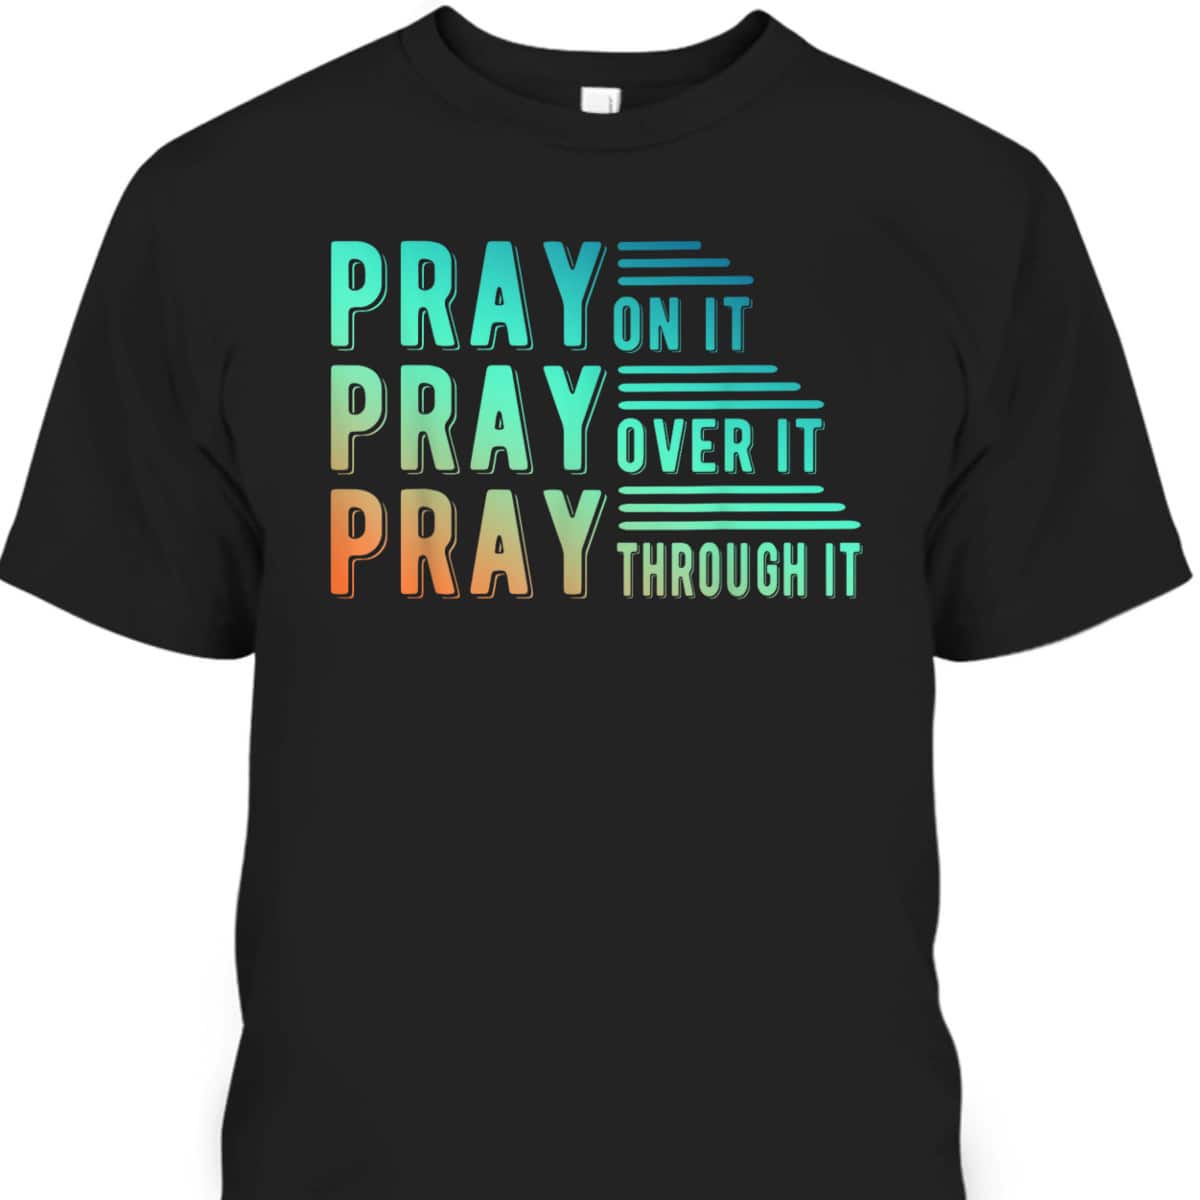 Pray On It Pray Over It Pray Through It Colorful Christian T-Shirt